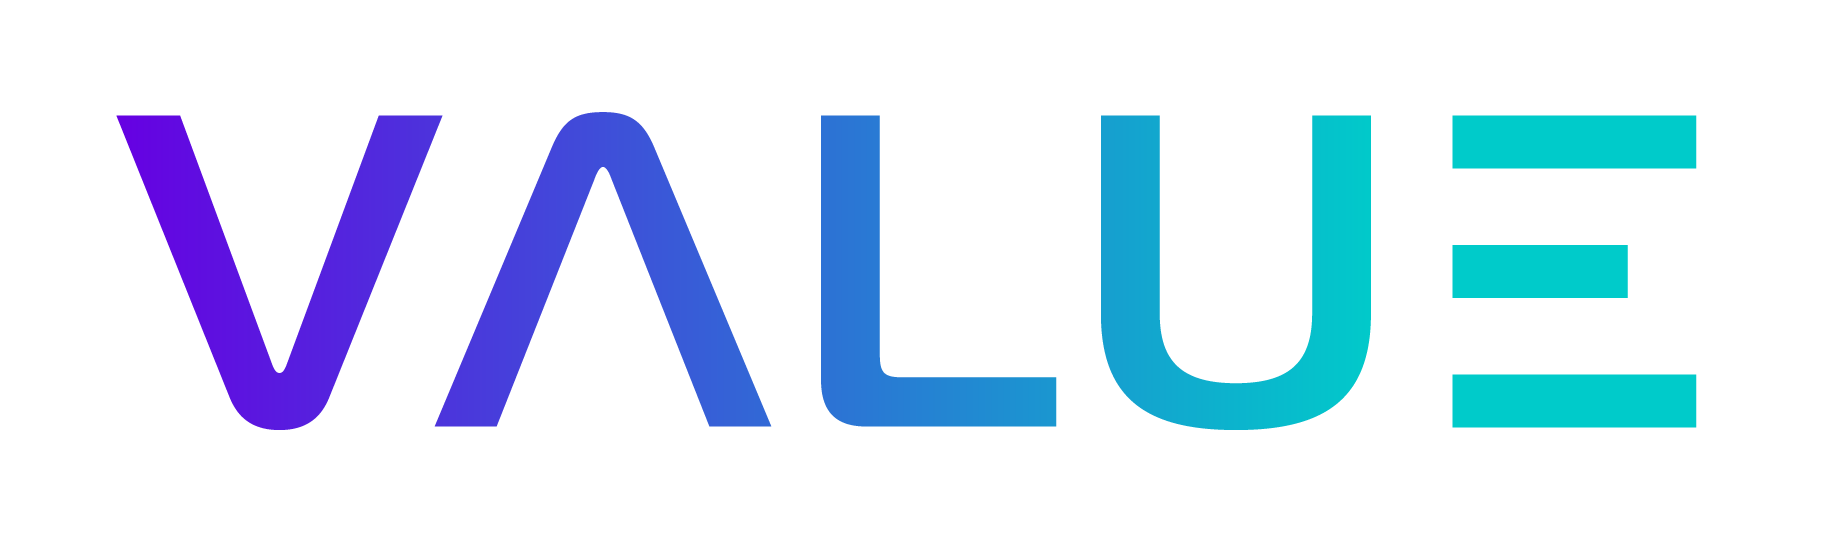 Logo Value